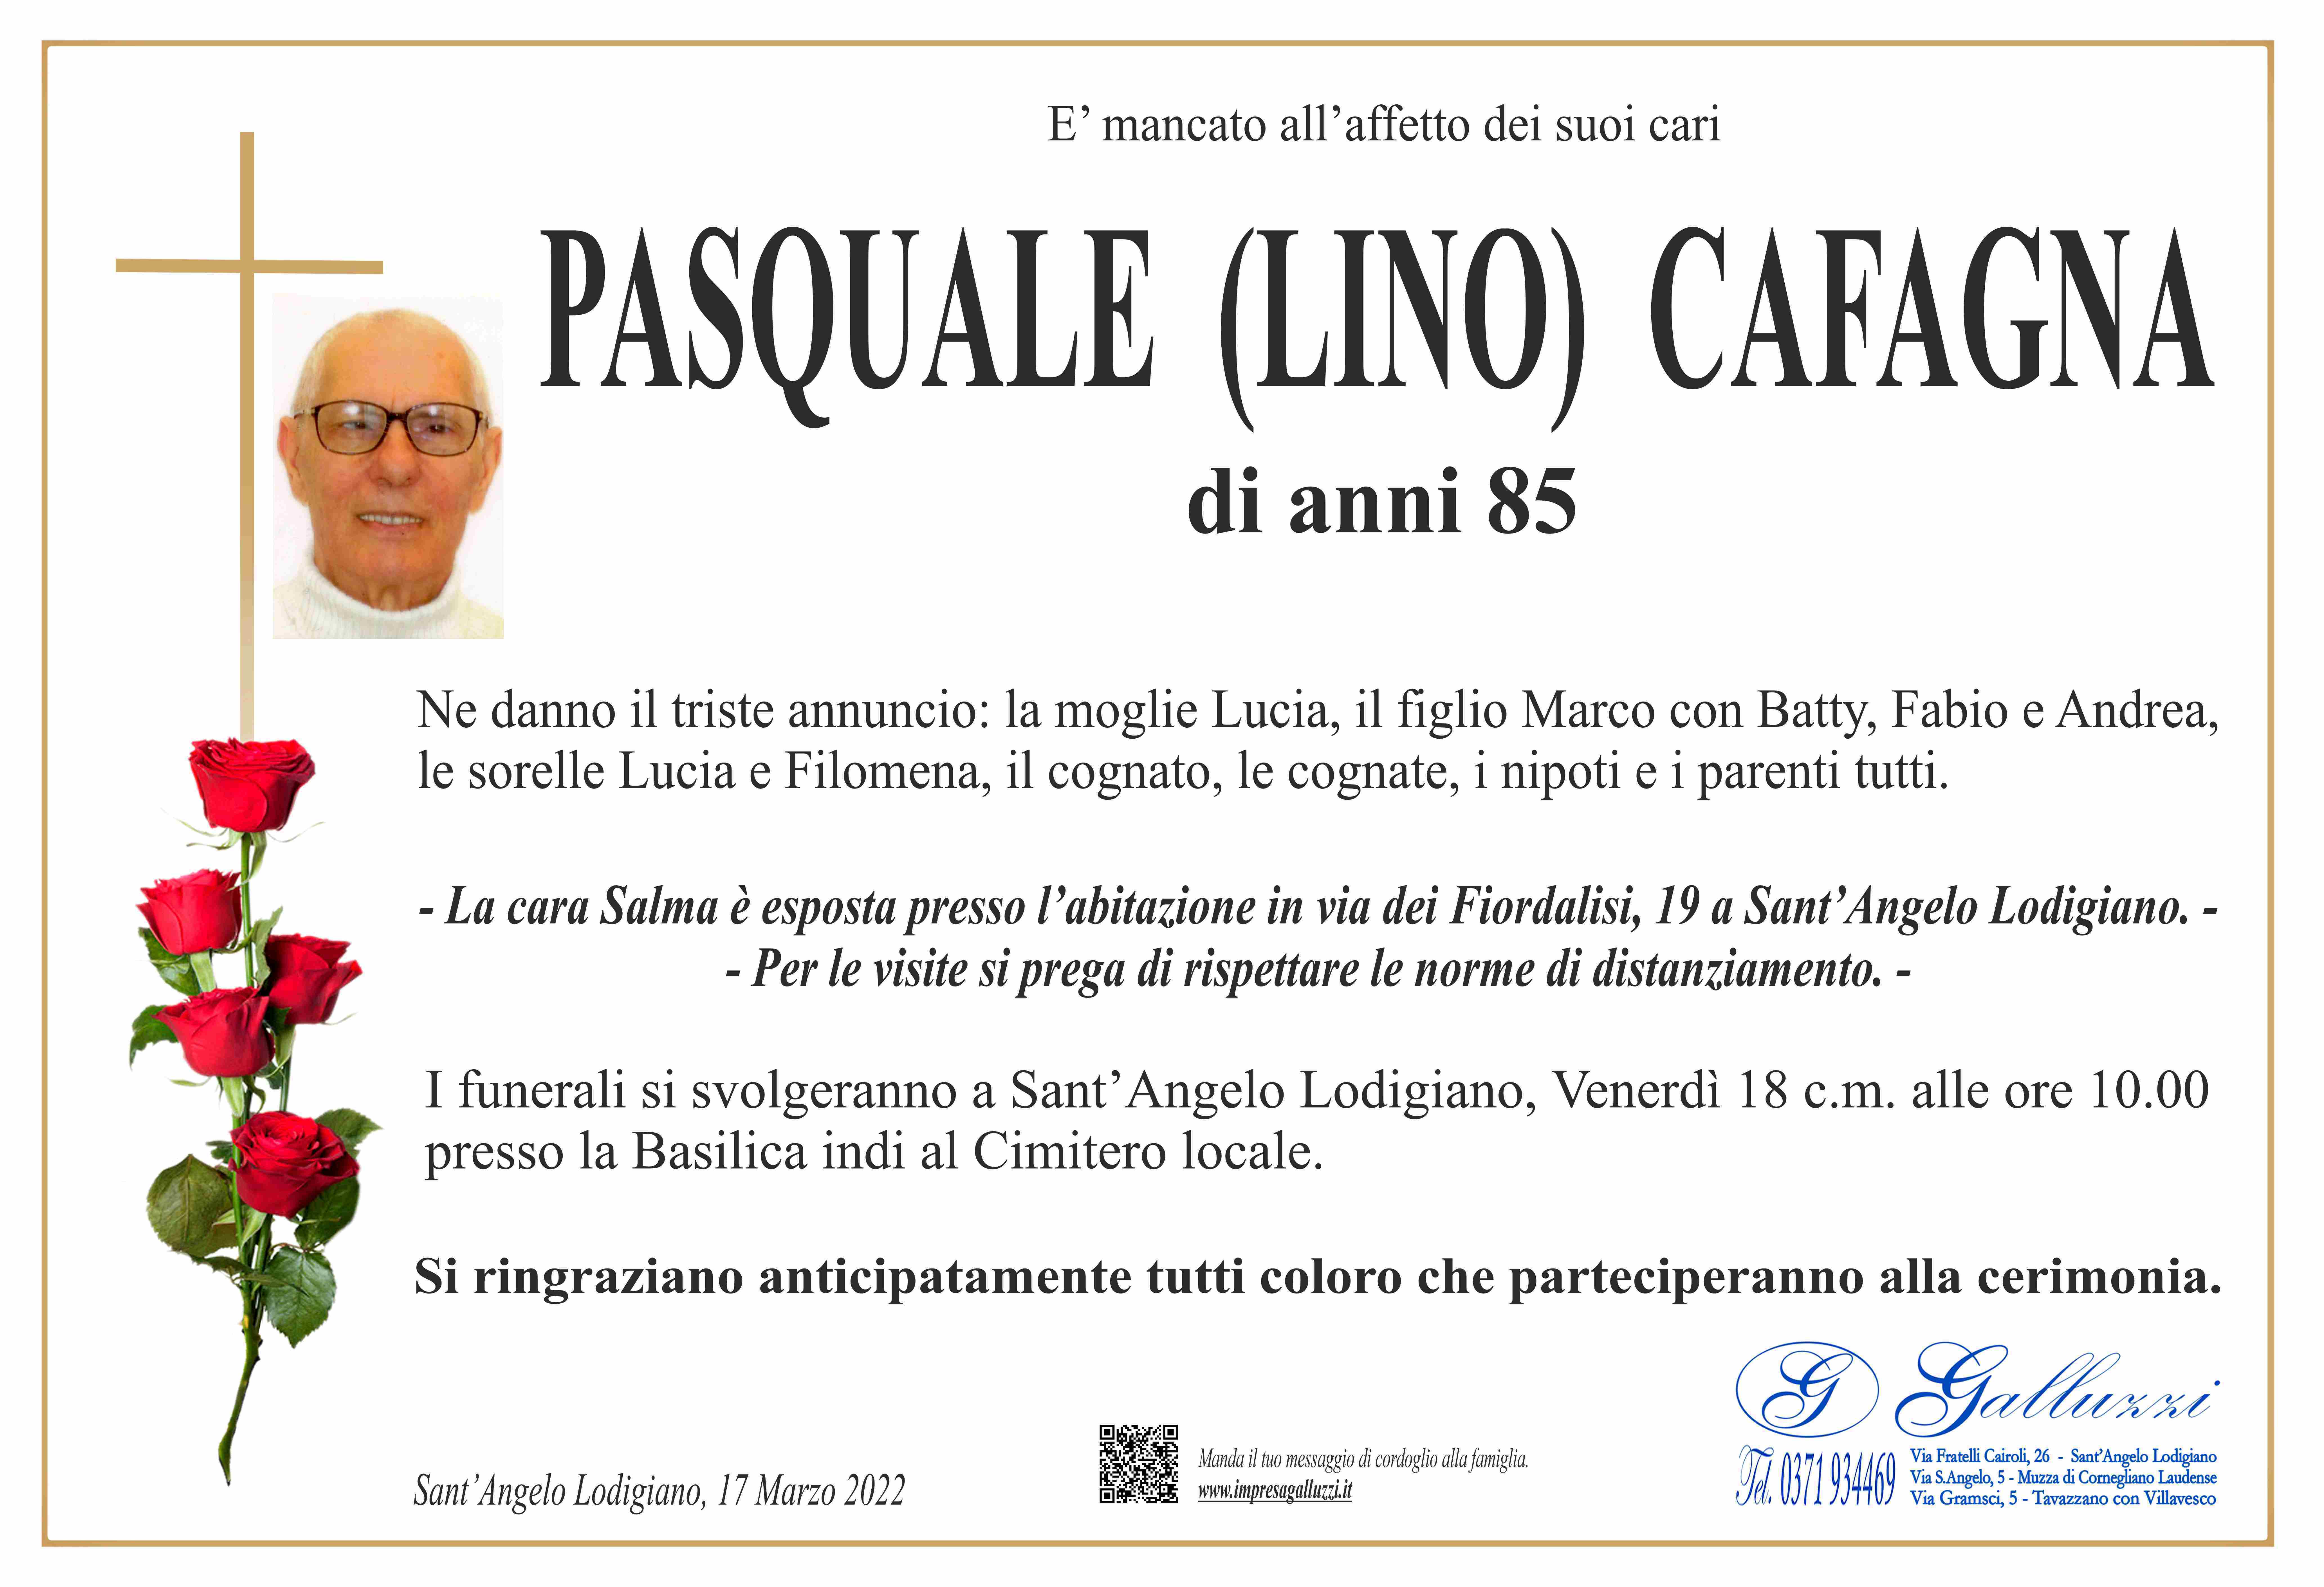 Pasquale Cafagna